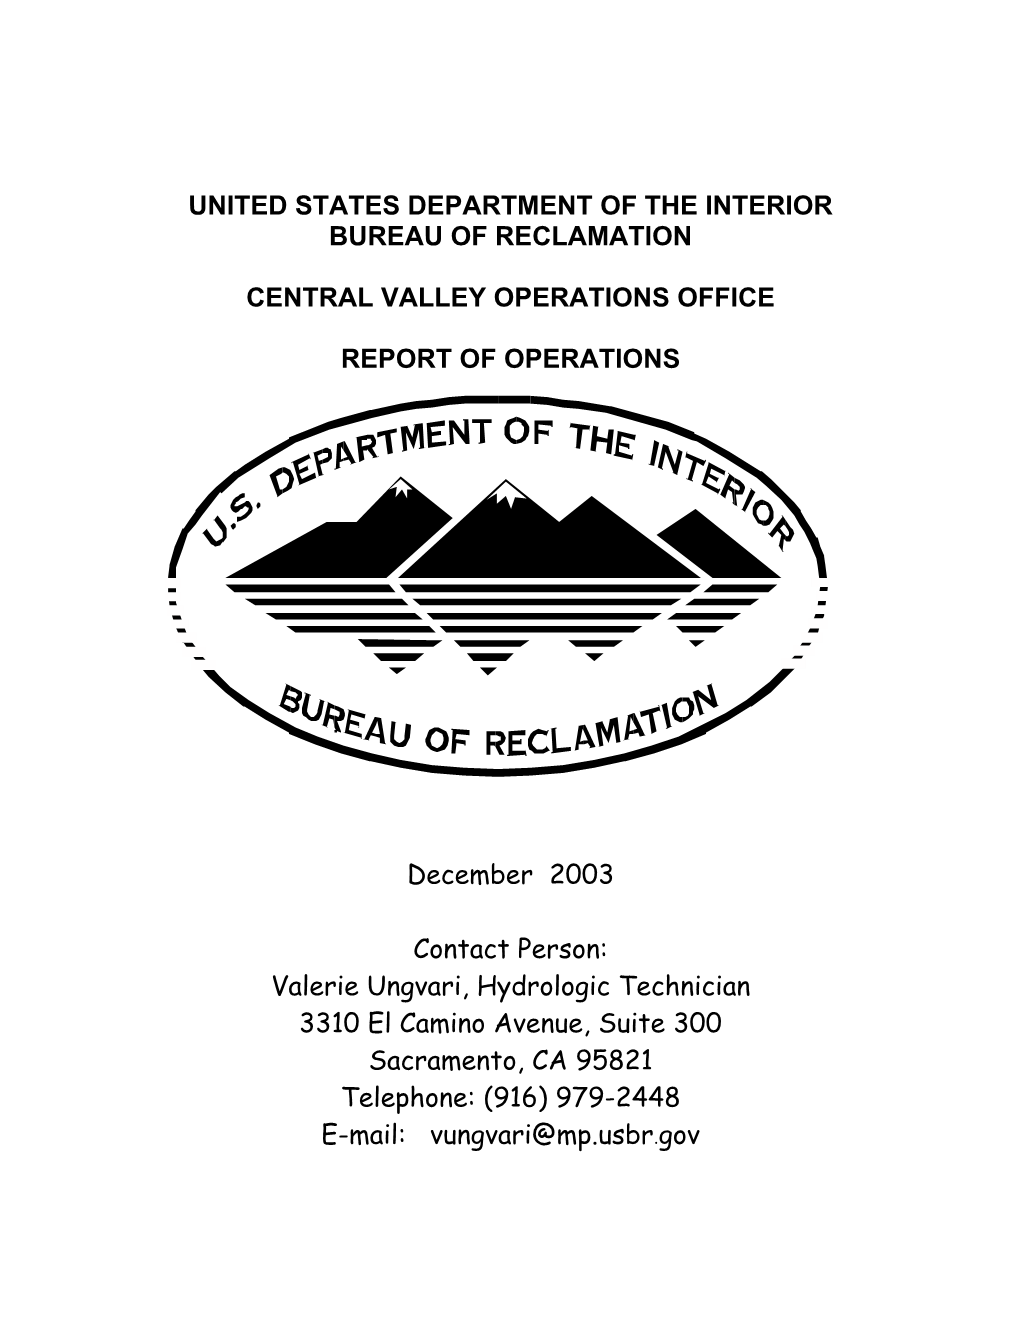 United States Department of the Interior Bureau of Reclamation